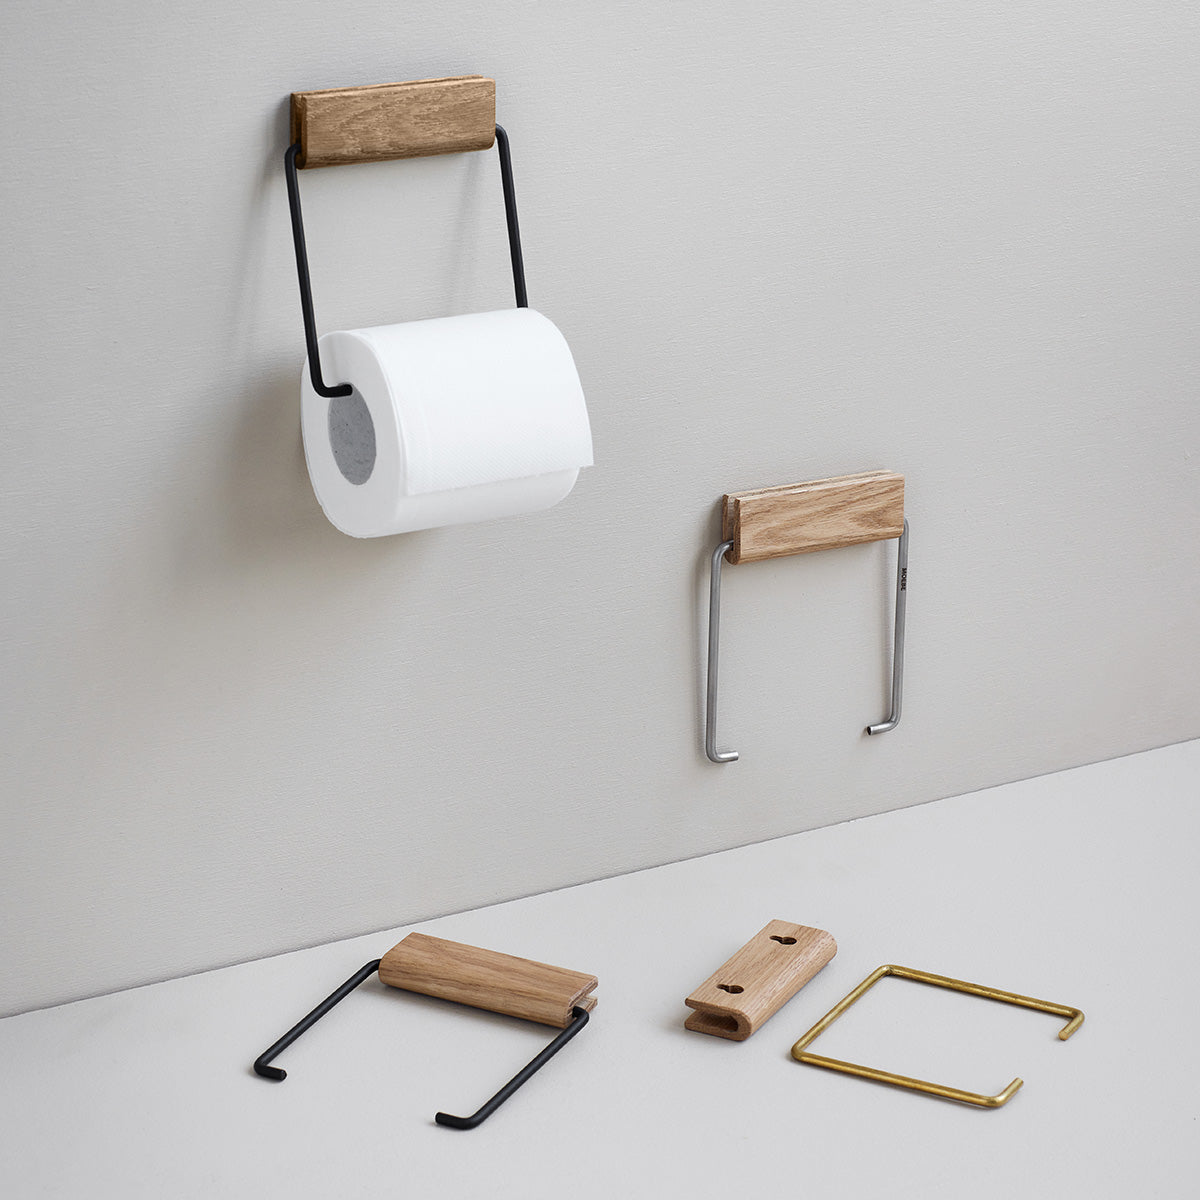 toilet paper holders